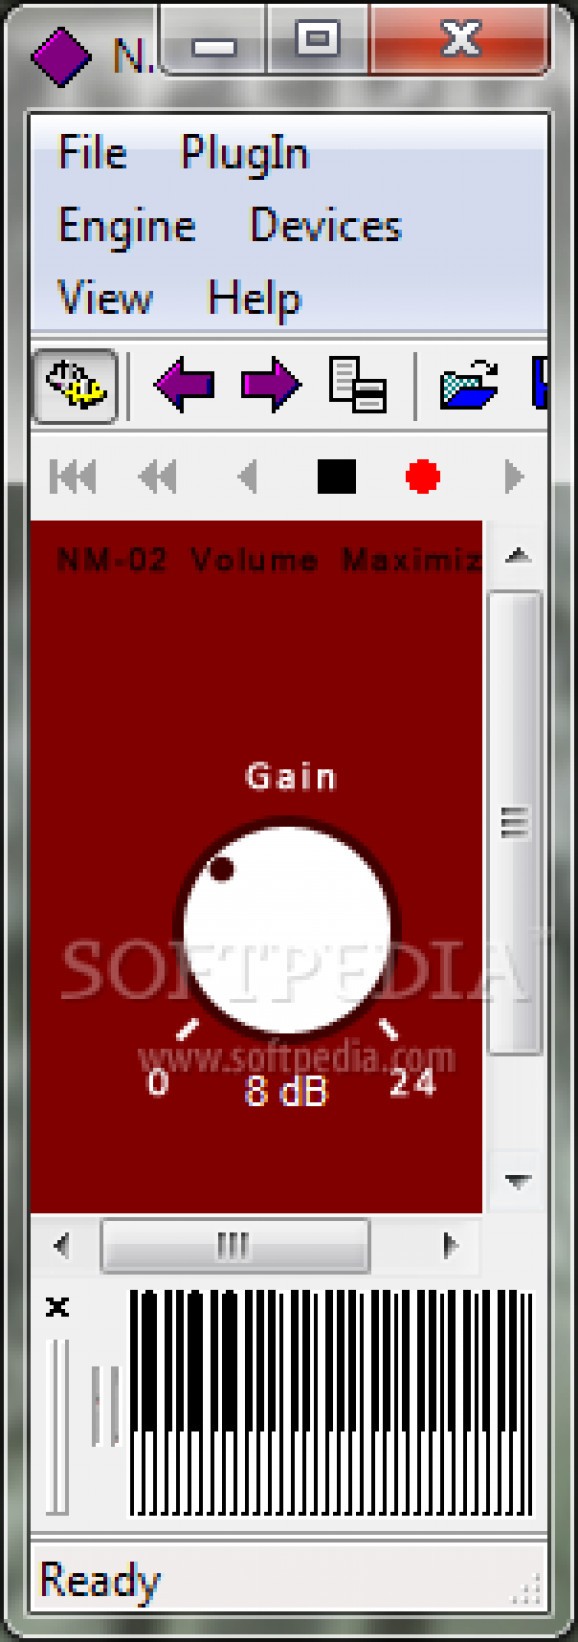 NM-02 Volume Maximizer screenshot